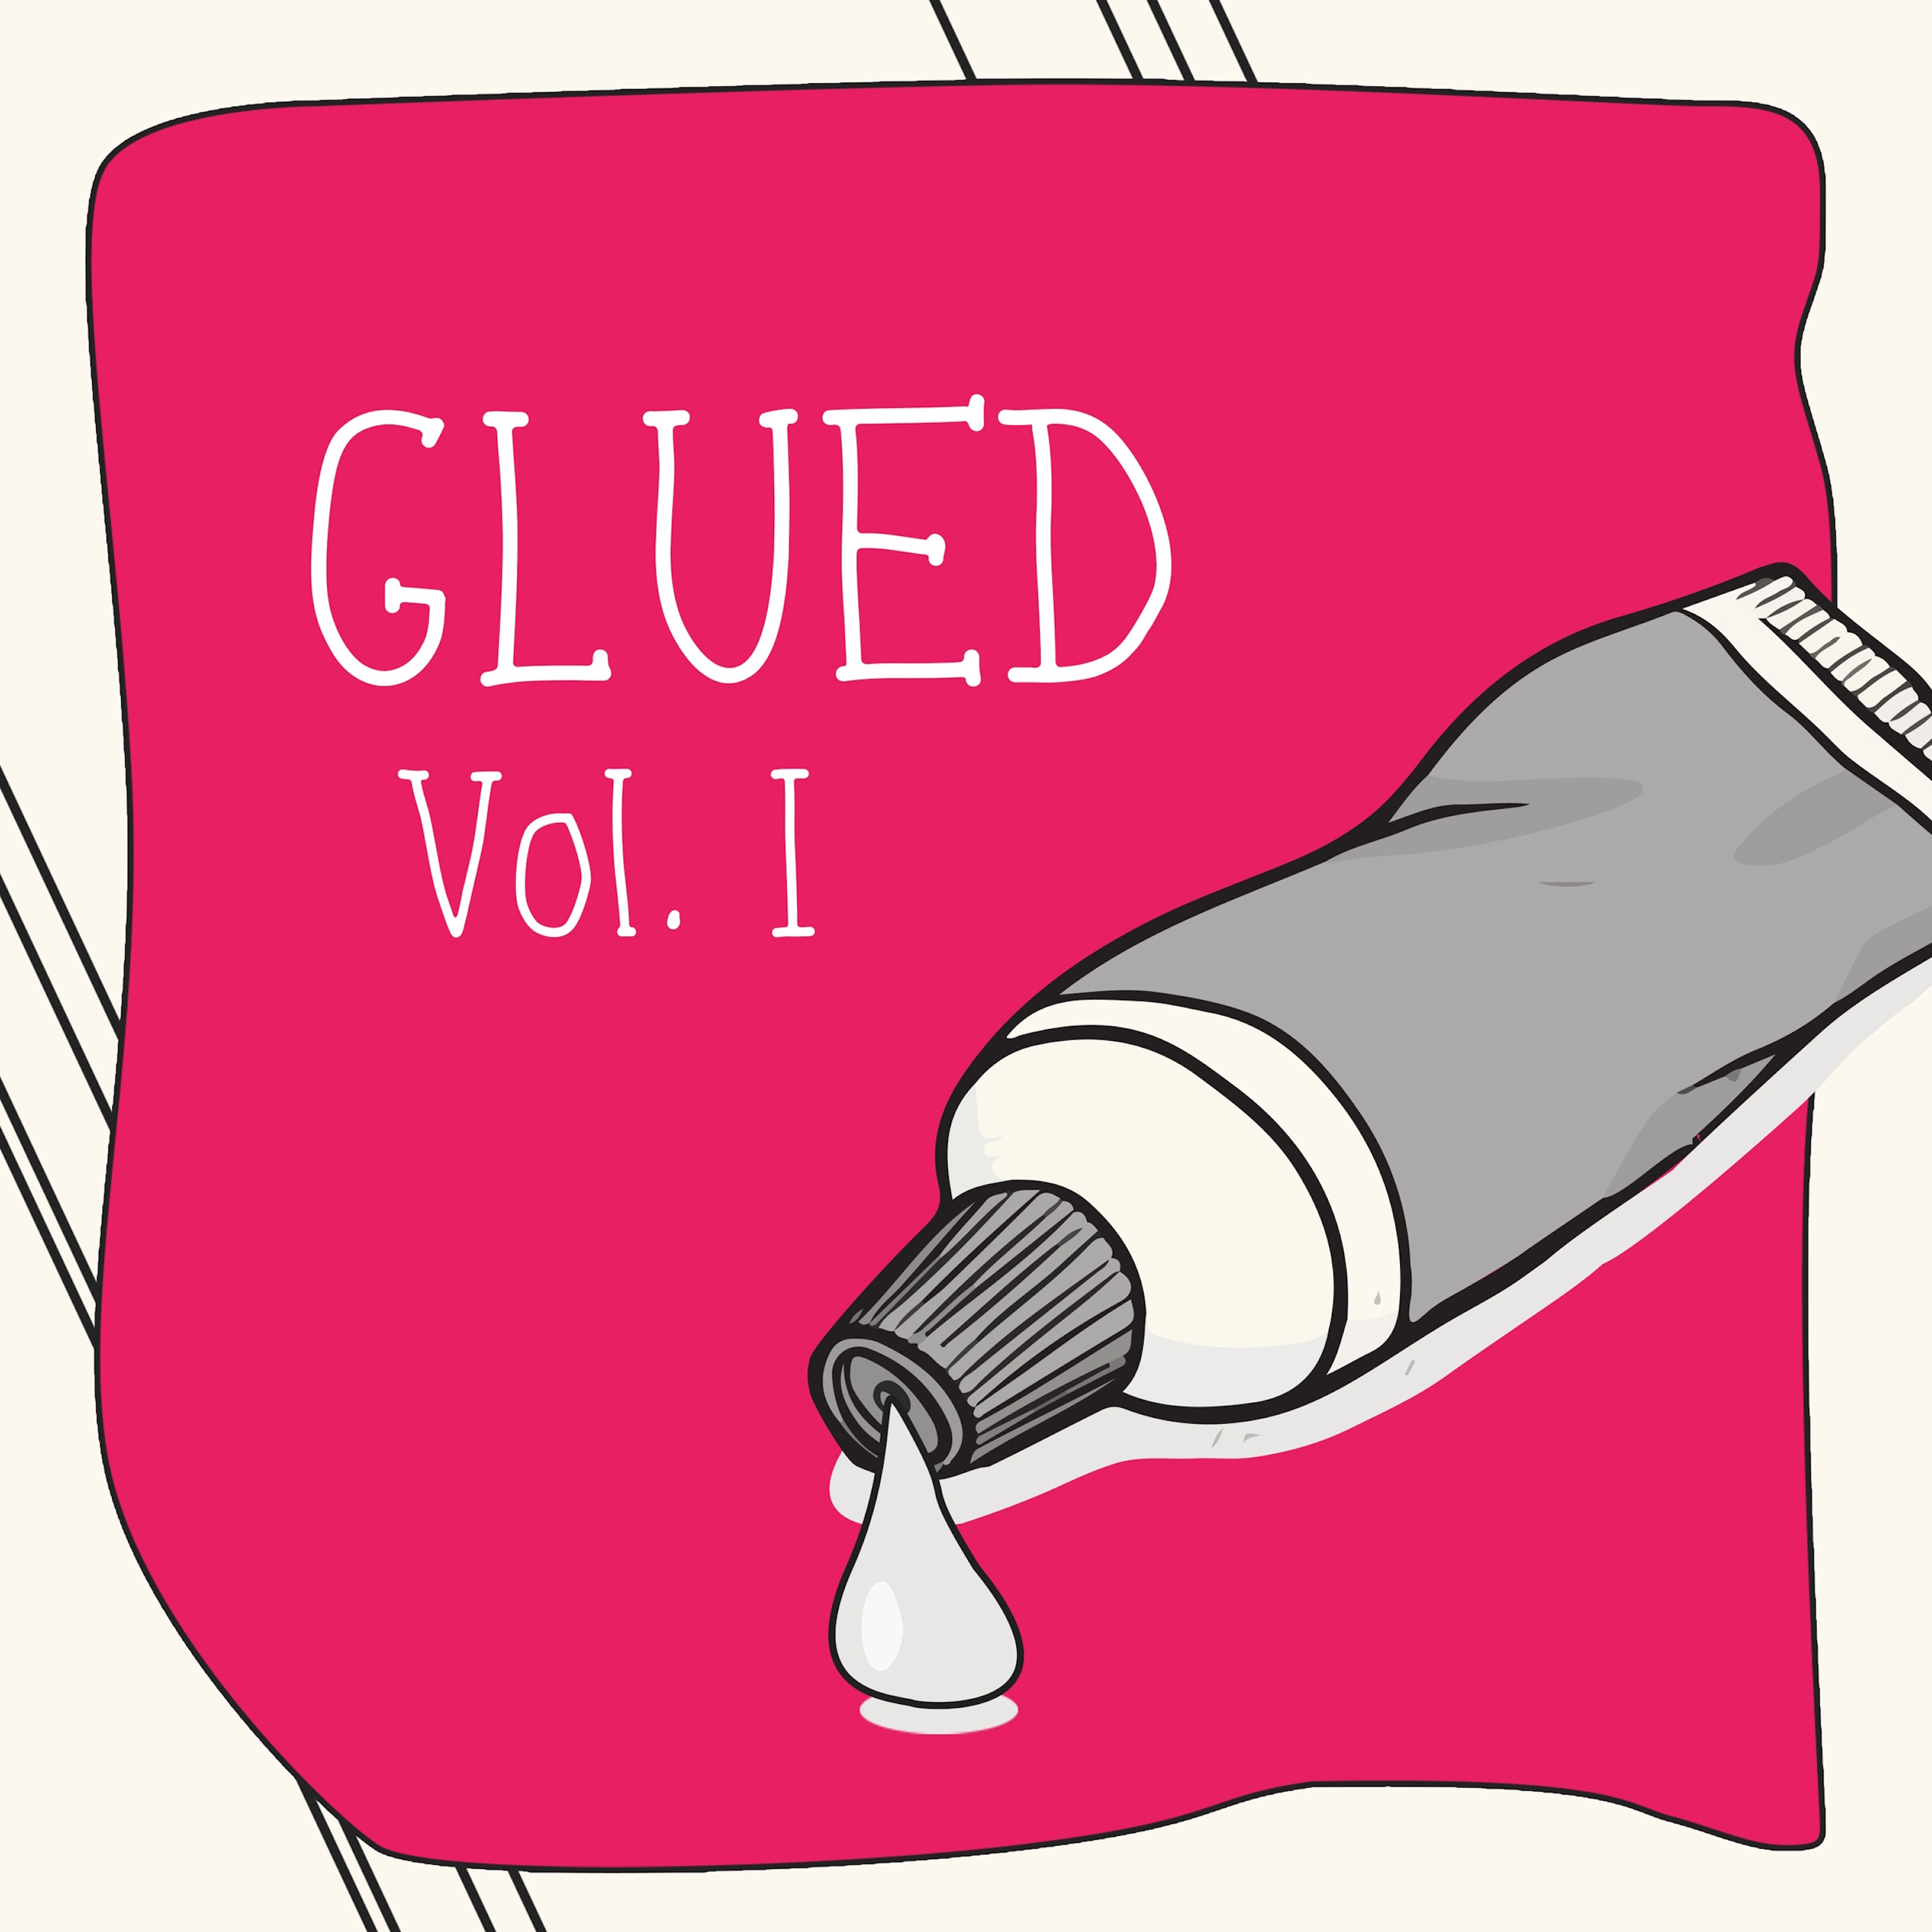 Glued, Vol. 1